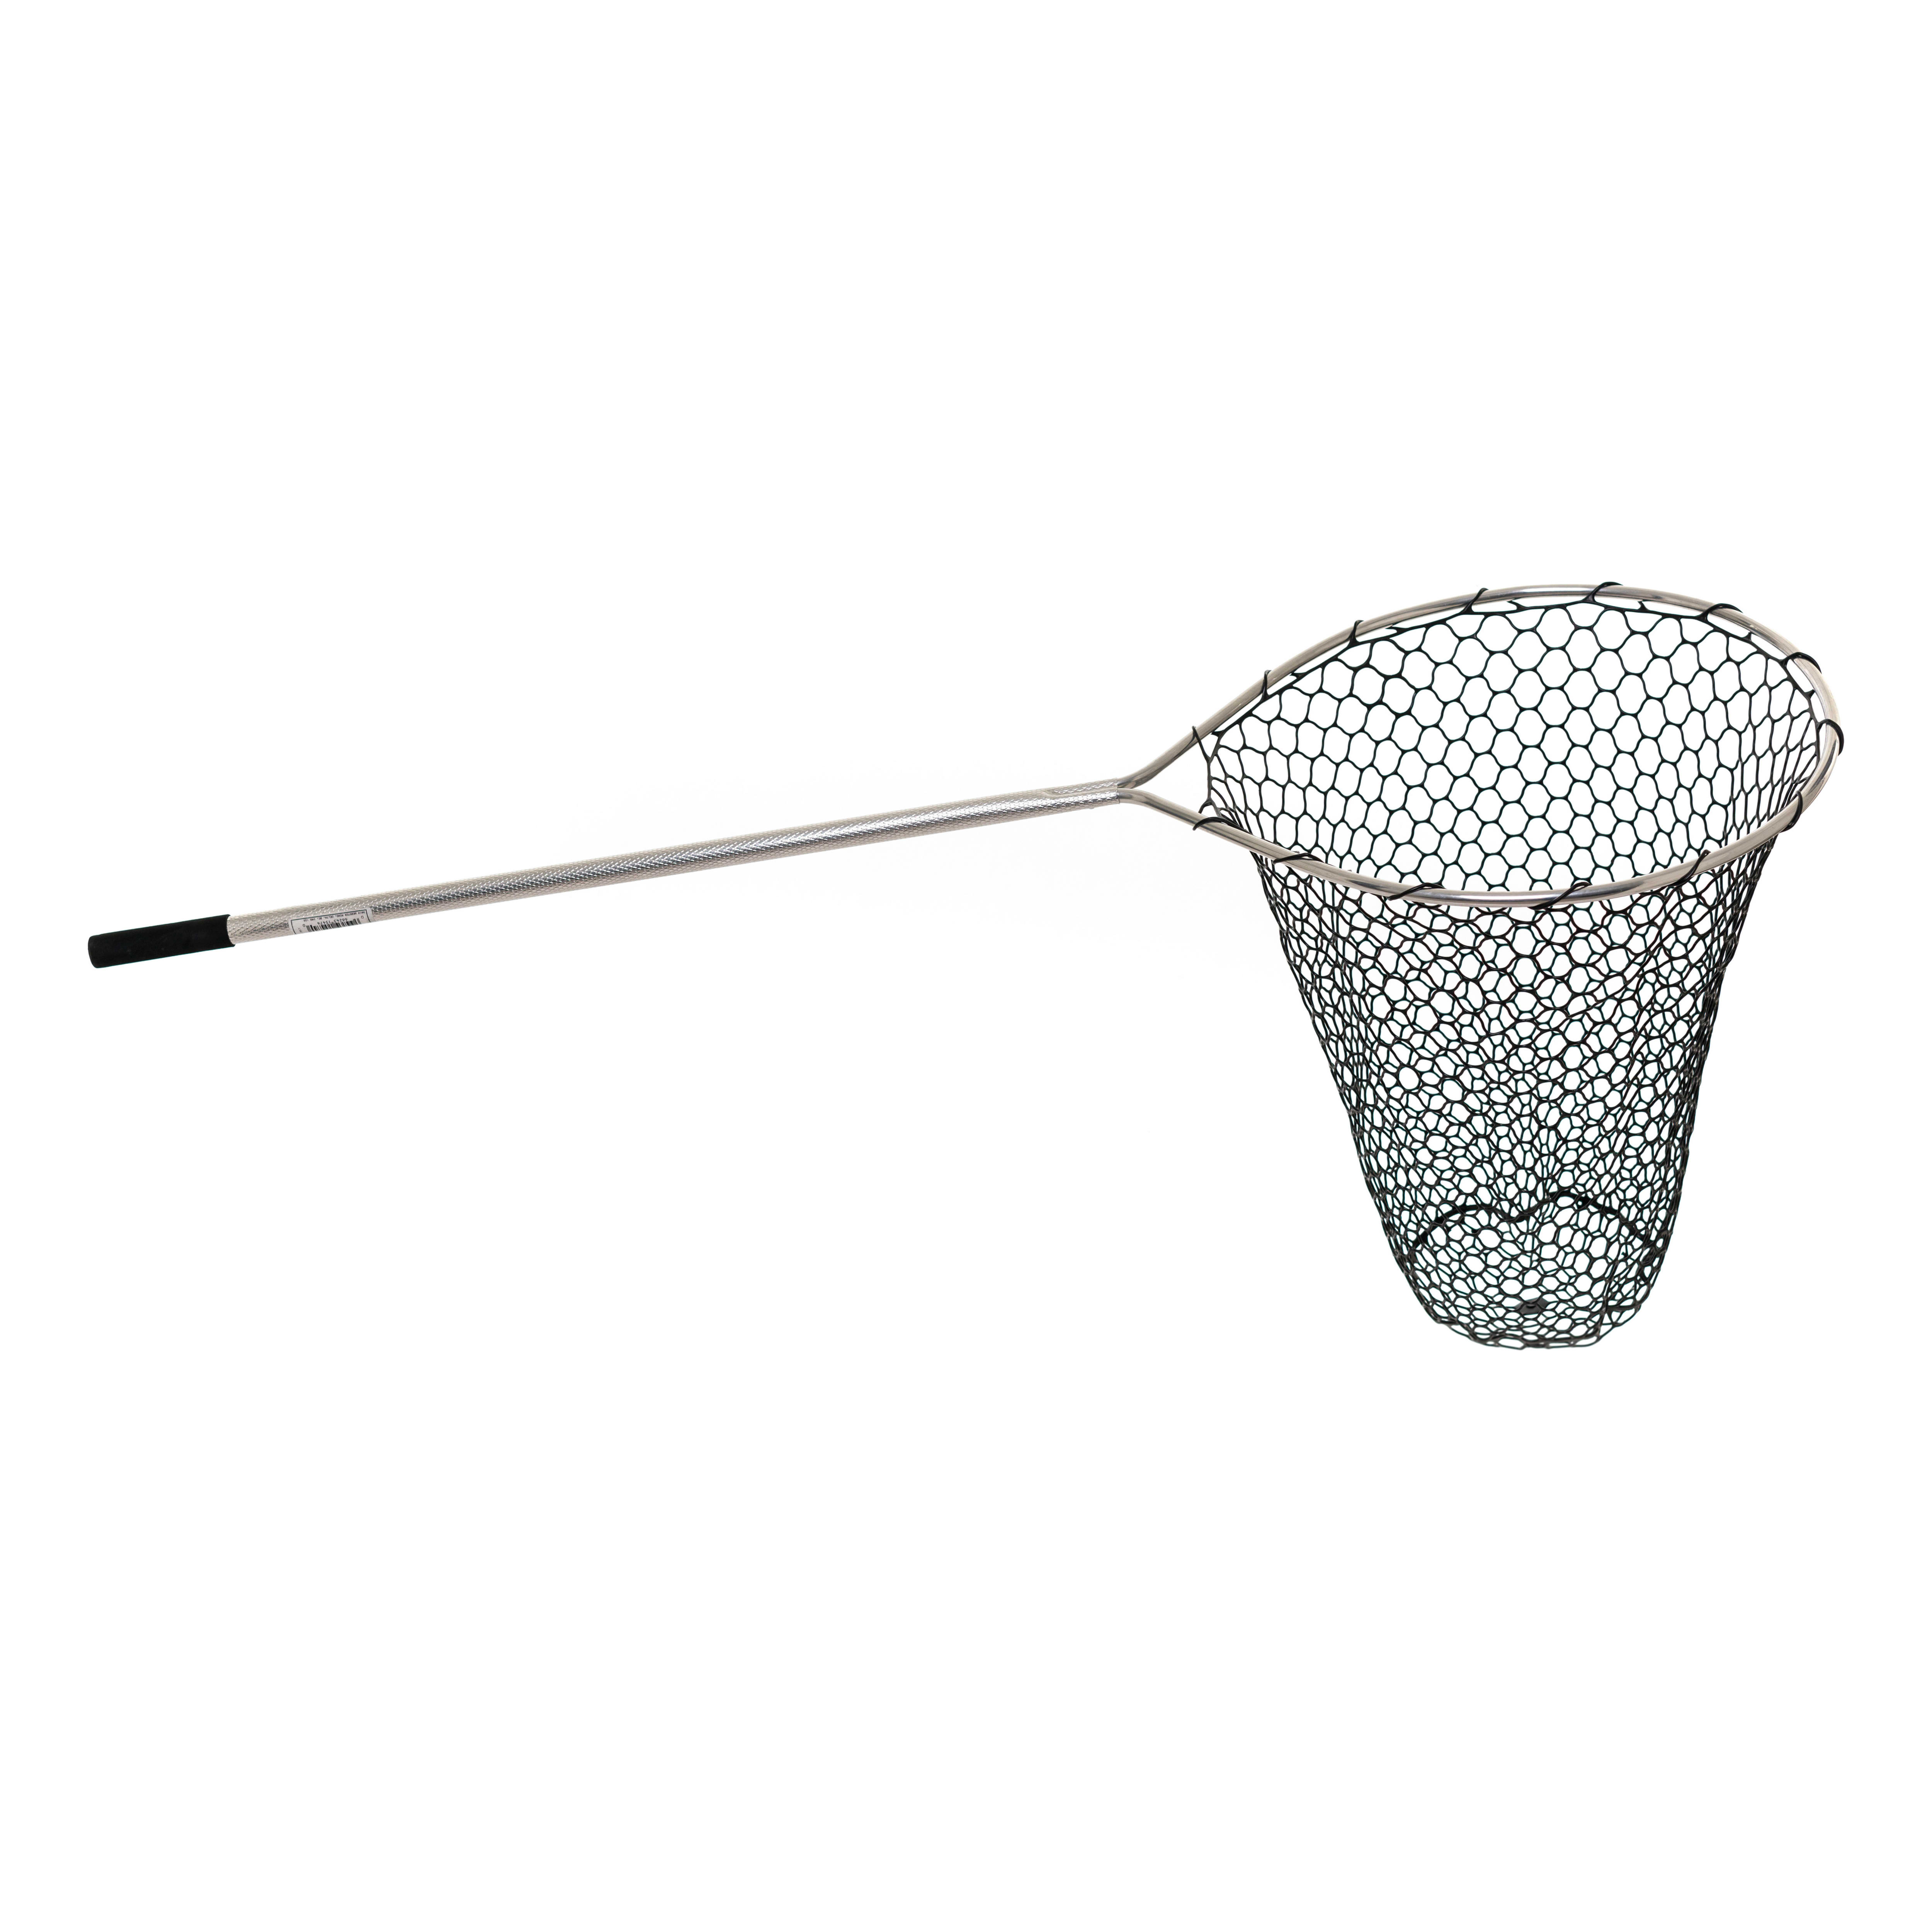  Ego S2 Slider Fishing Net, Ultimate Fishermen's Tool  Telescoping Handle, Replaceable Head, Salt & Freshwater, 22-23 Handle,  48x108 Inch Hoop : Sports & Outdoors